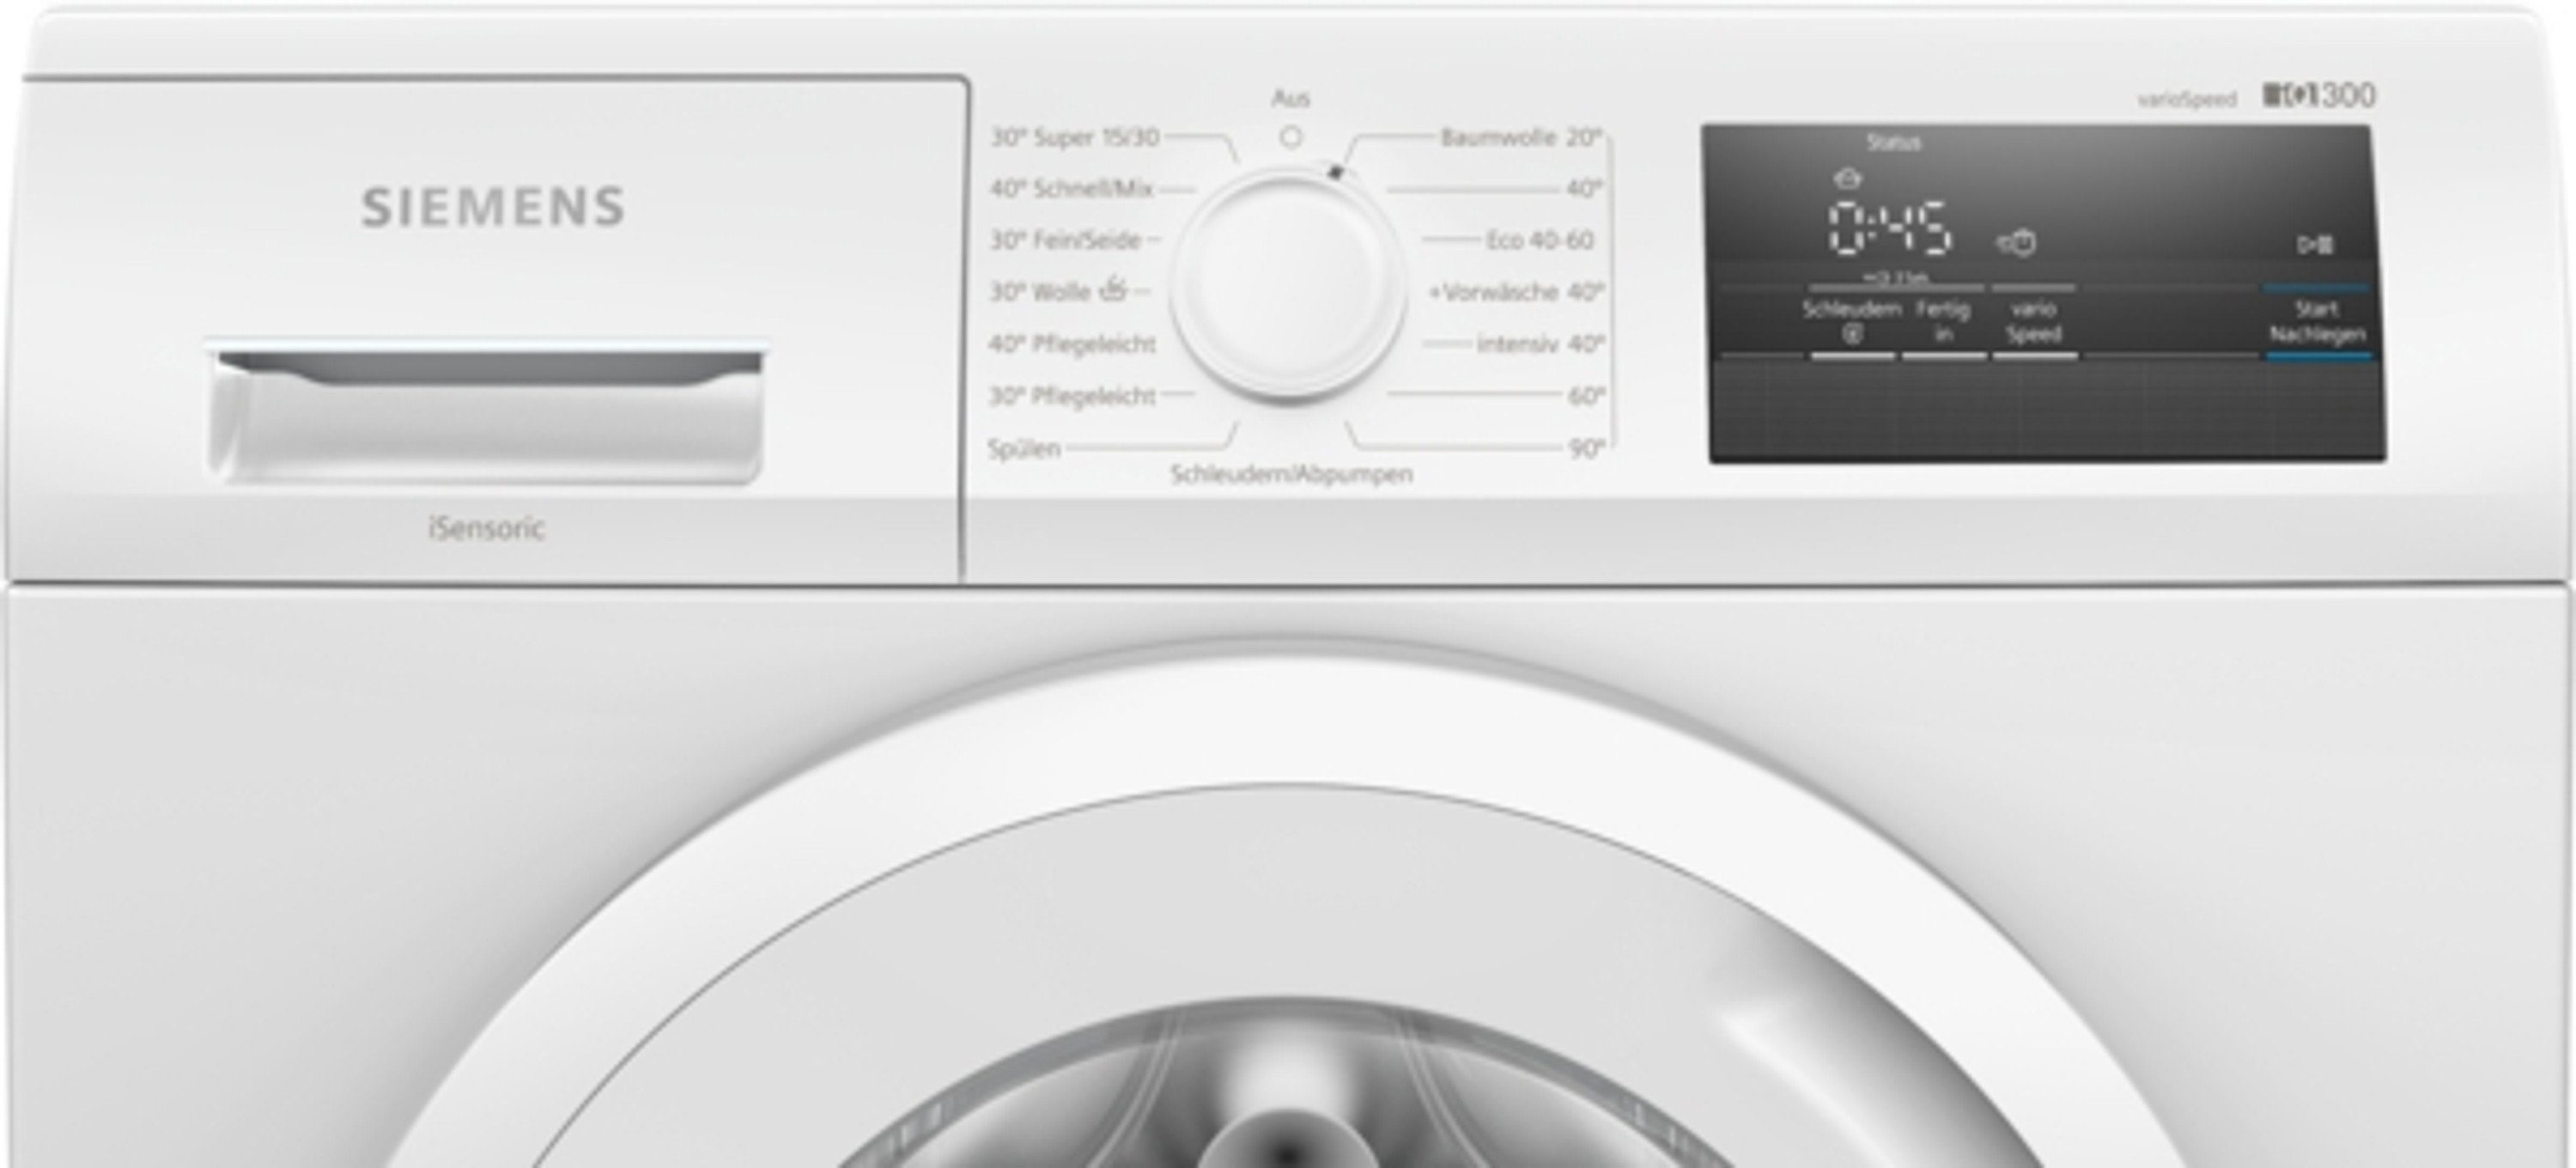 SIEMENS Waschmaschine WM14N0A2, 7 kg, 1400 U/min, speedPack L, LED-Display,  simpleTouch, iQdrive